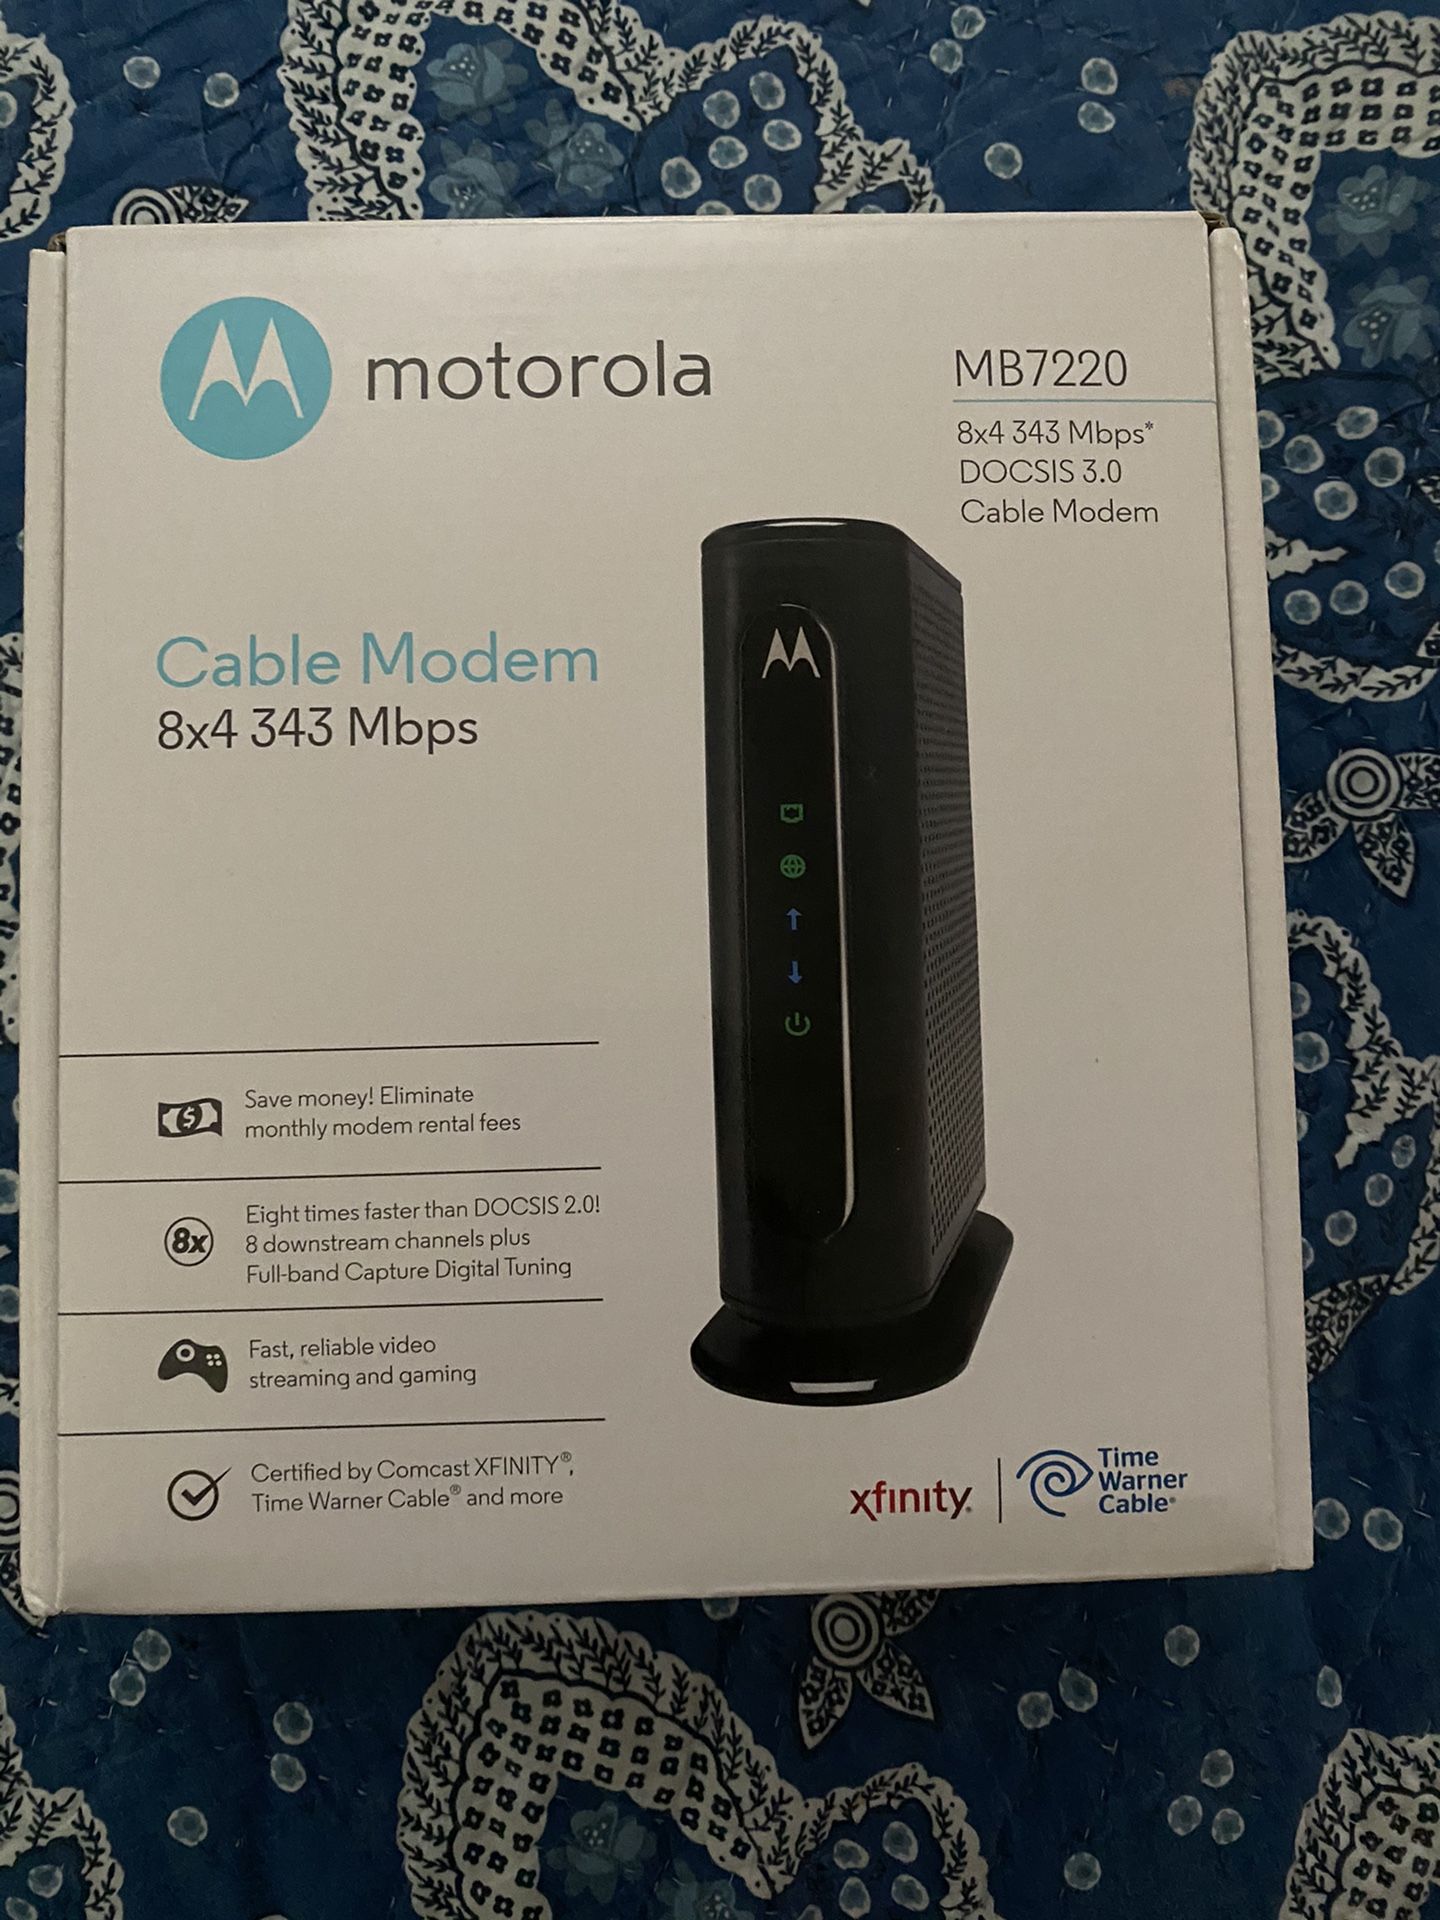 Motorola MB7220 cable modem like new